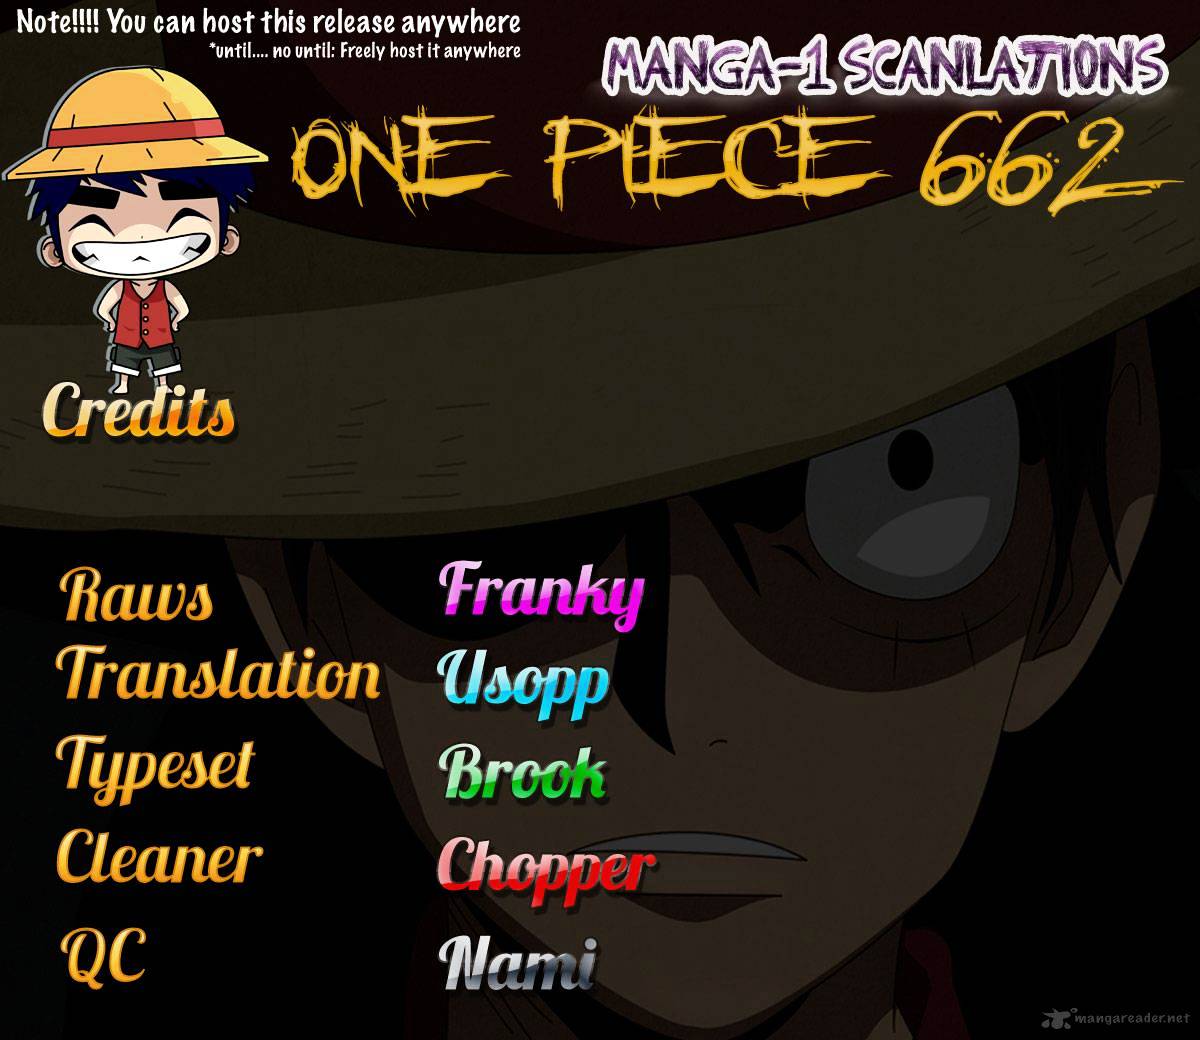 One Piece, Chapter 662 - Shichibukai Law vs Vice Admiral Smoker image 20